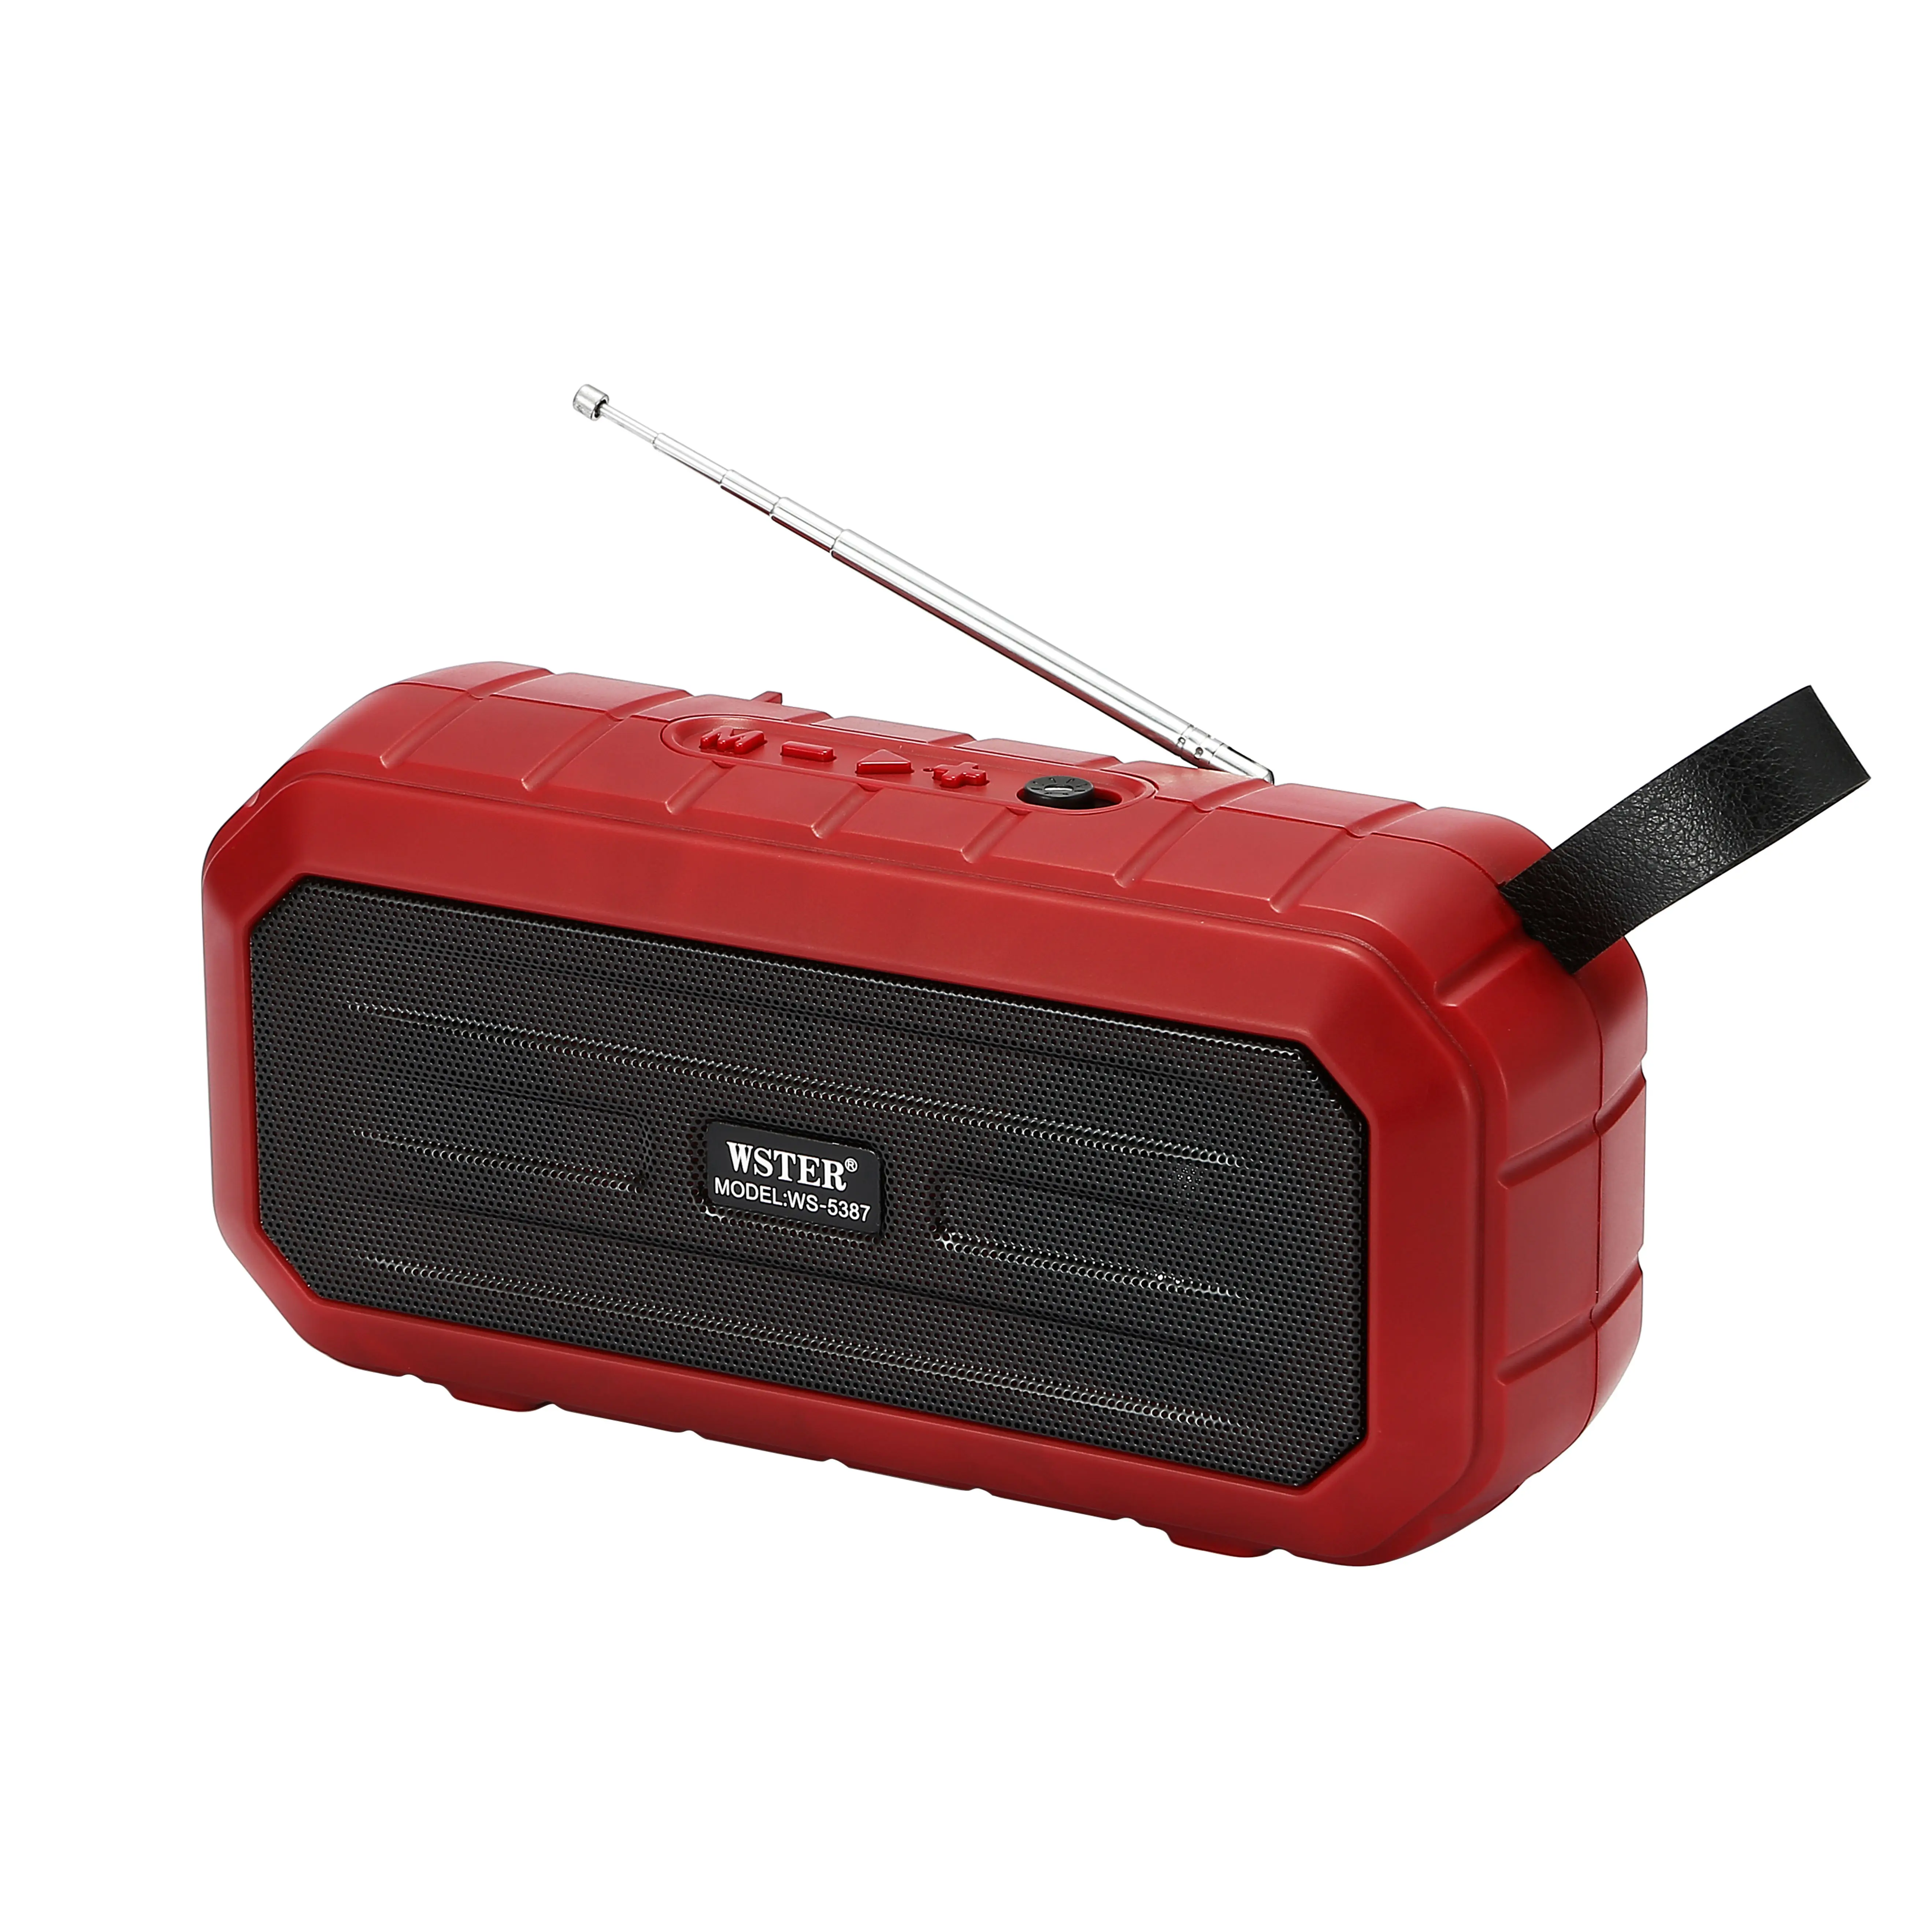 WS-5387 Portable Outdoor Solar Energy FM Radio BT Speaker With Flashlight